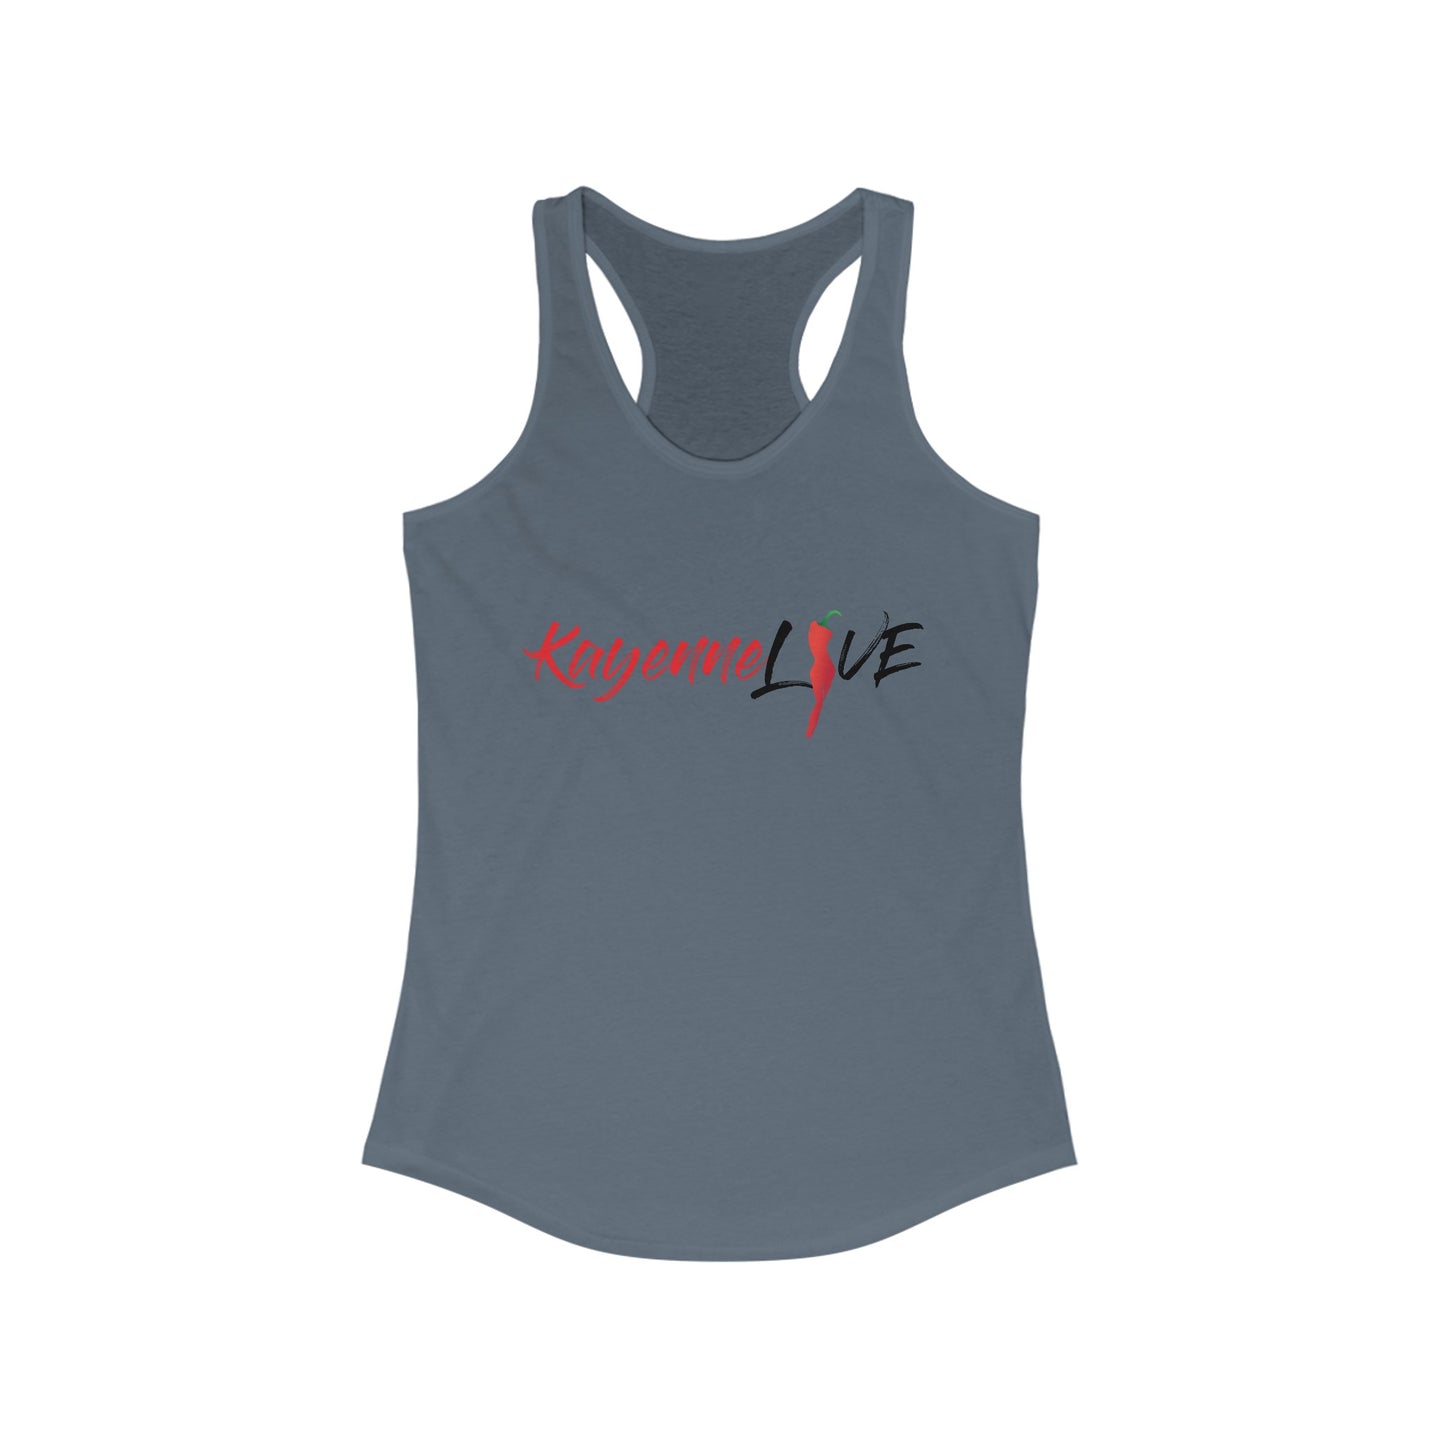 Kayenne Live Black Logo_Women's Ideal Racerback Tank